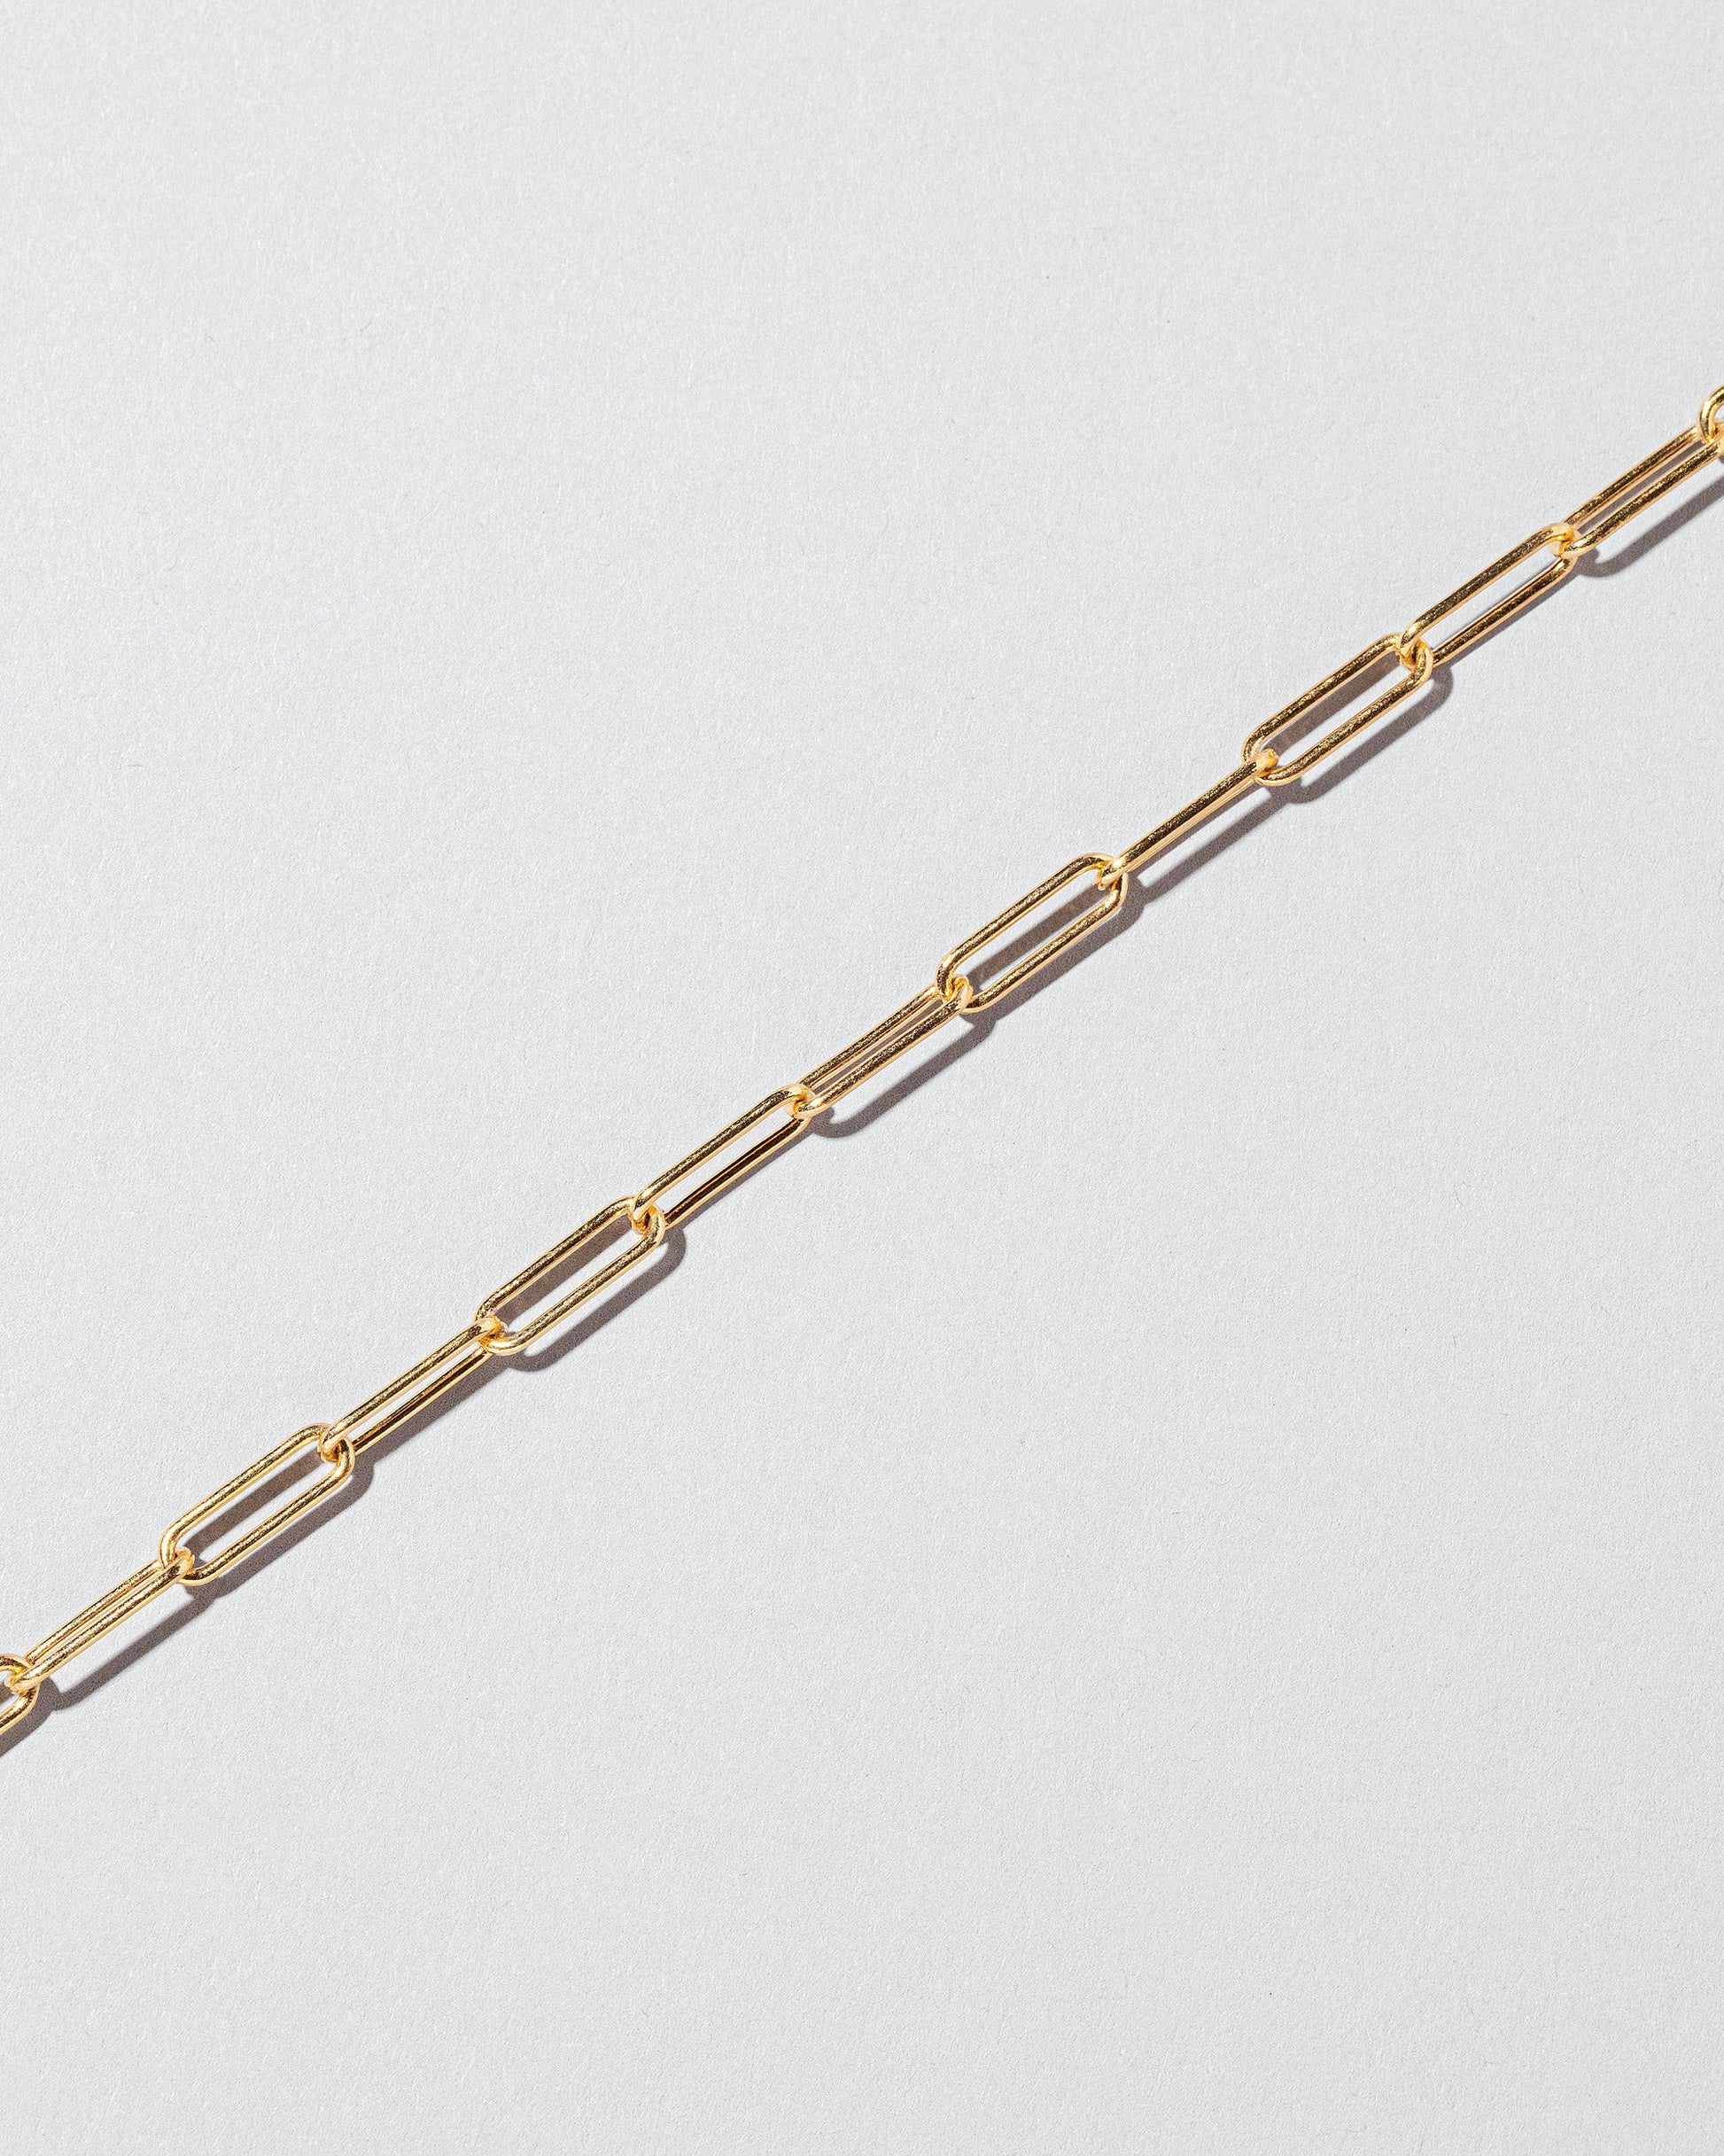  Long Oval Chain Bracelet on light color background.